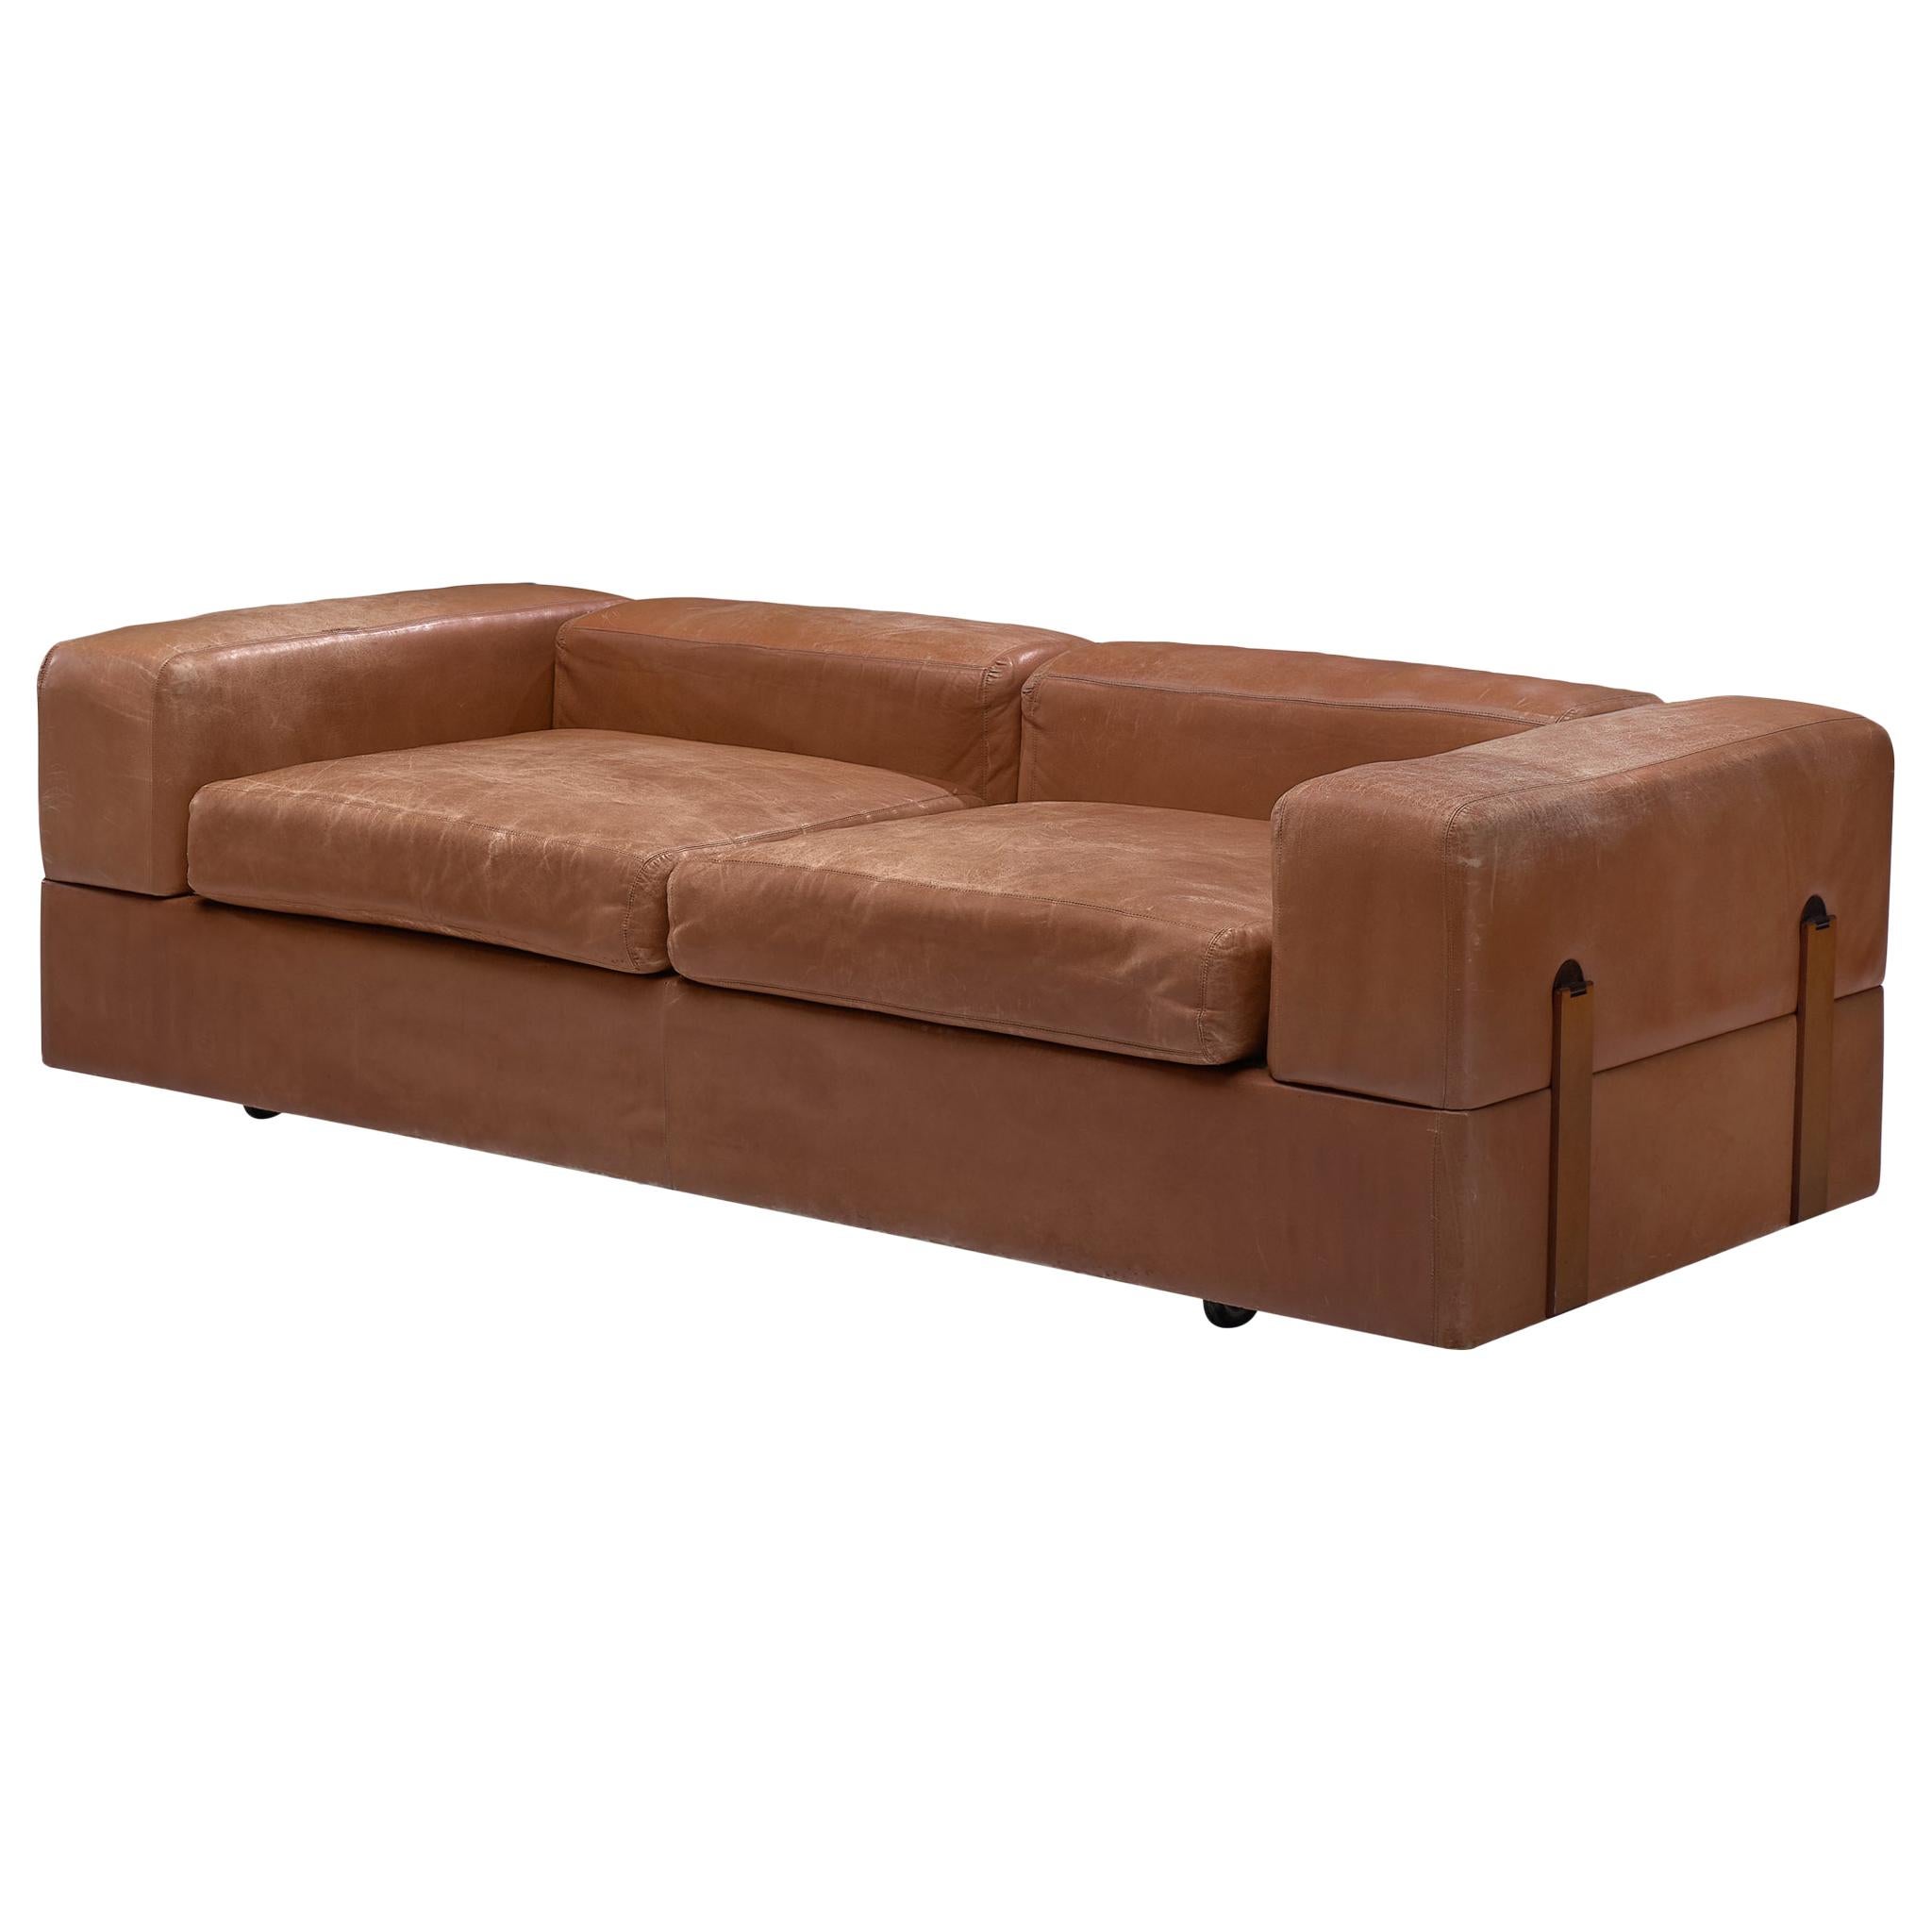 Tito Agnoli for Cinova Sofa Bed in Cognac Leather and Steel